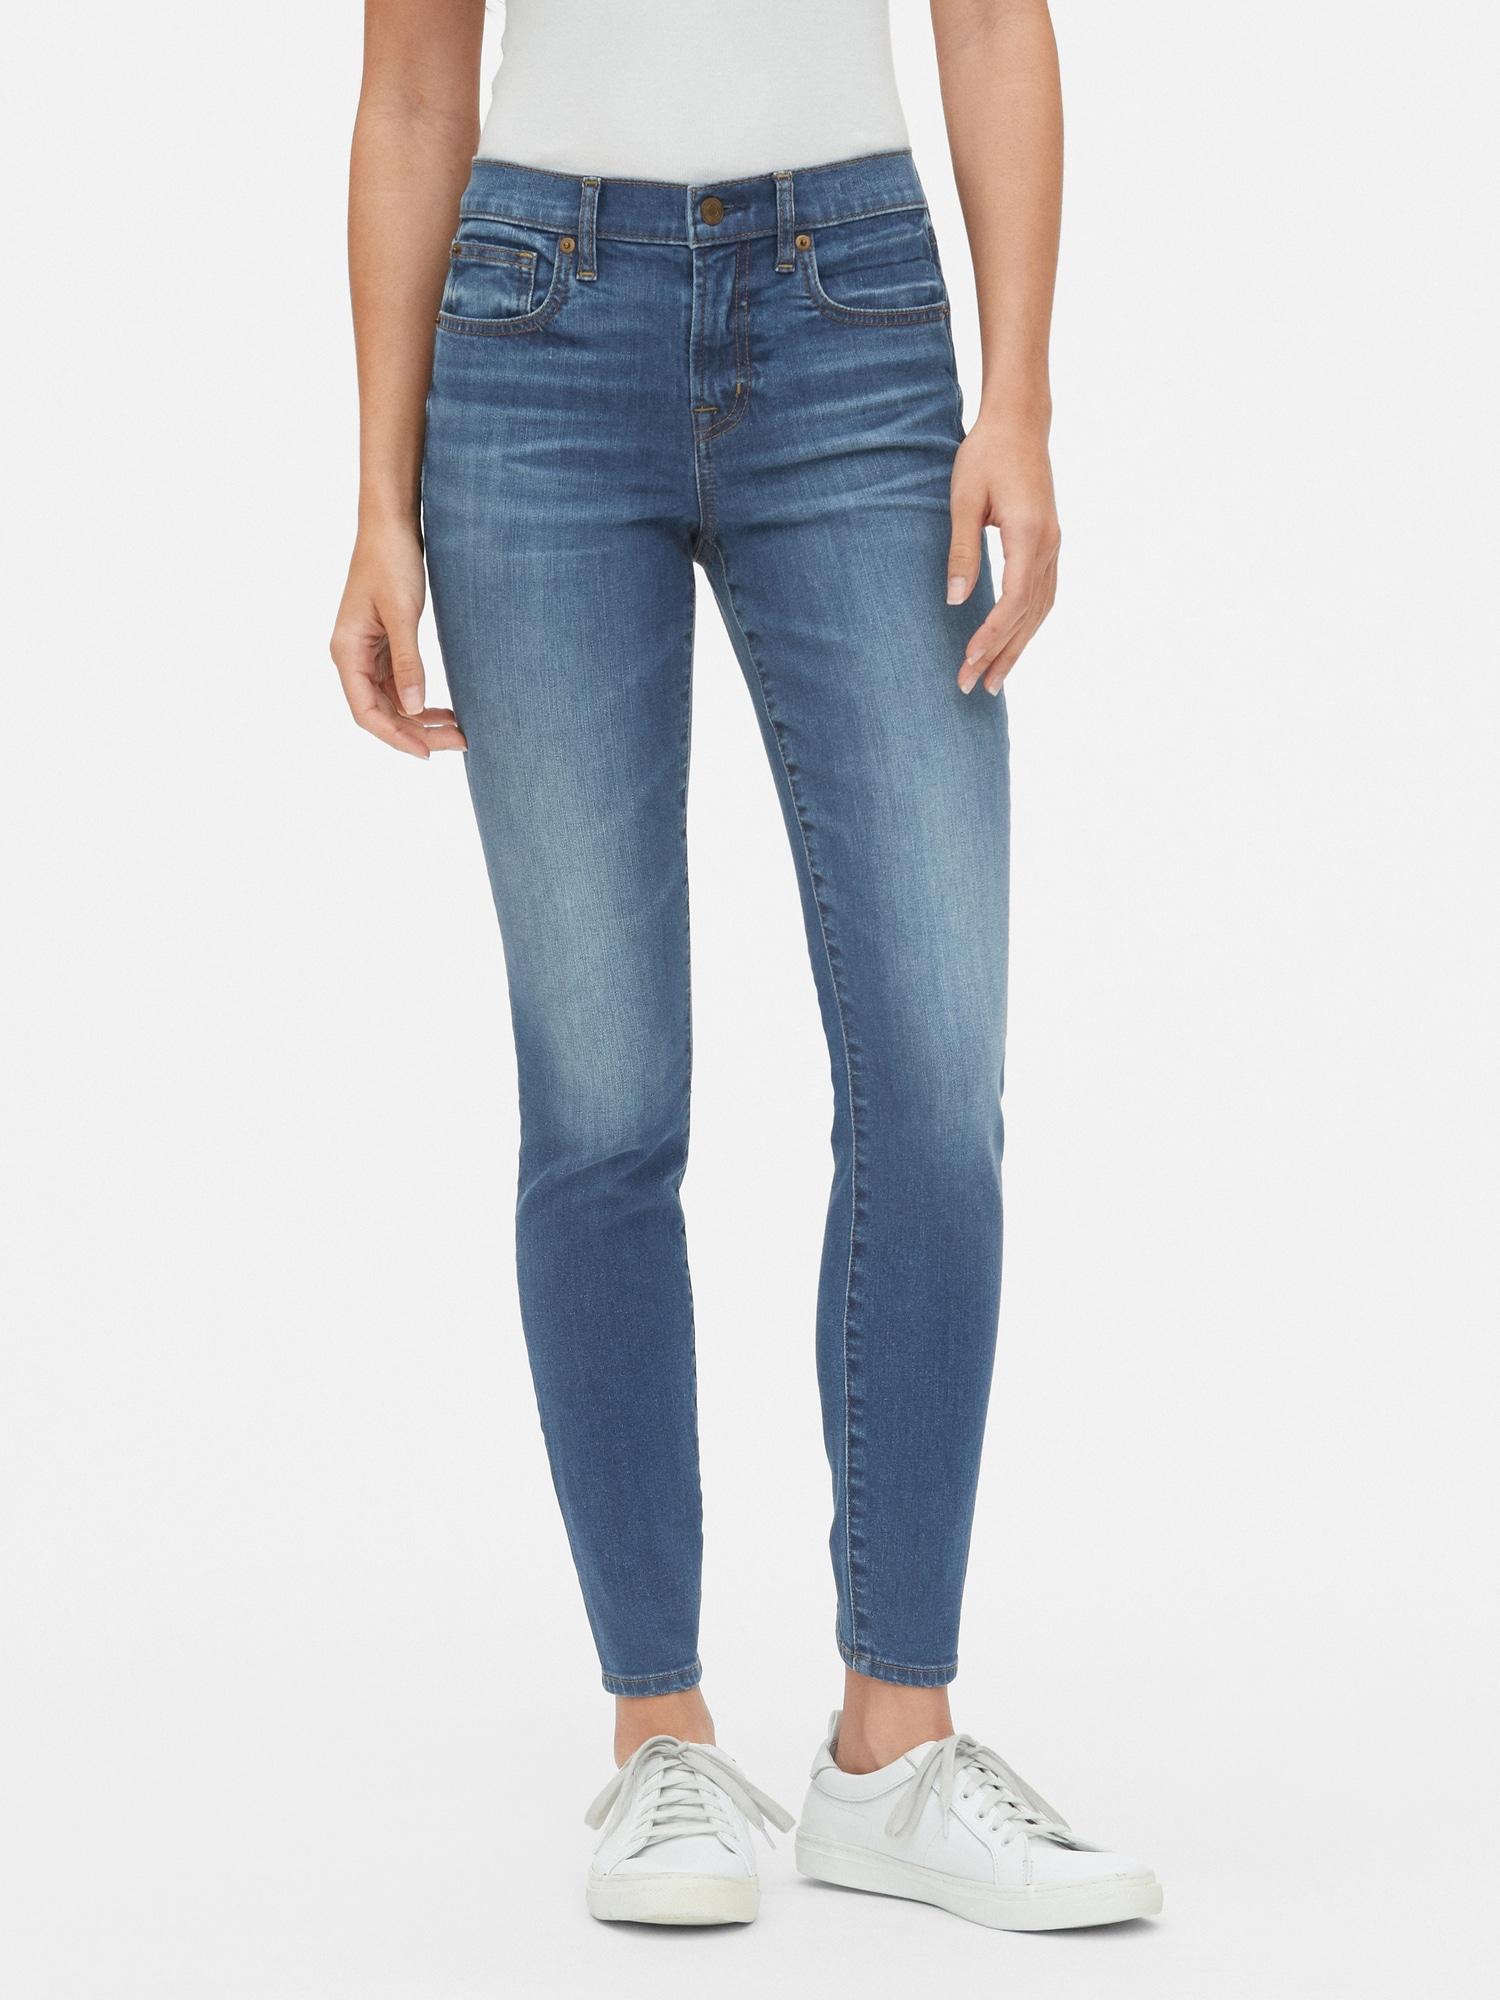 Lyst - Gap Mid Rise True Skinny Jeans in Blue